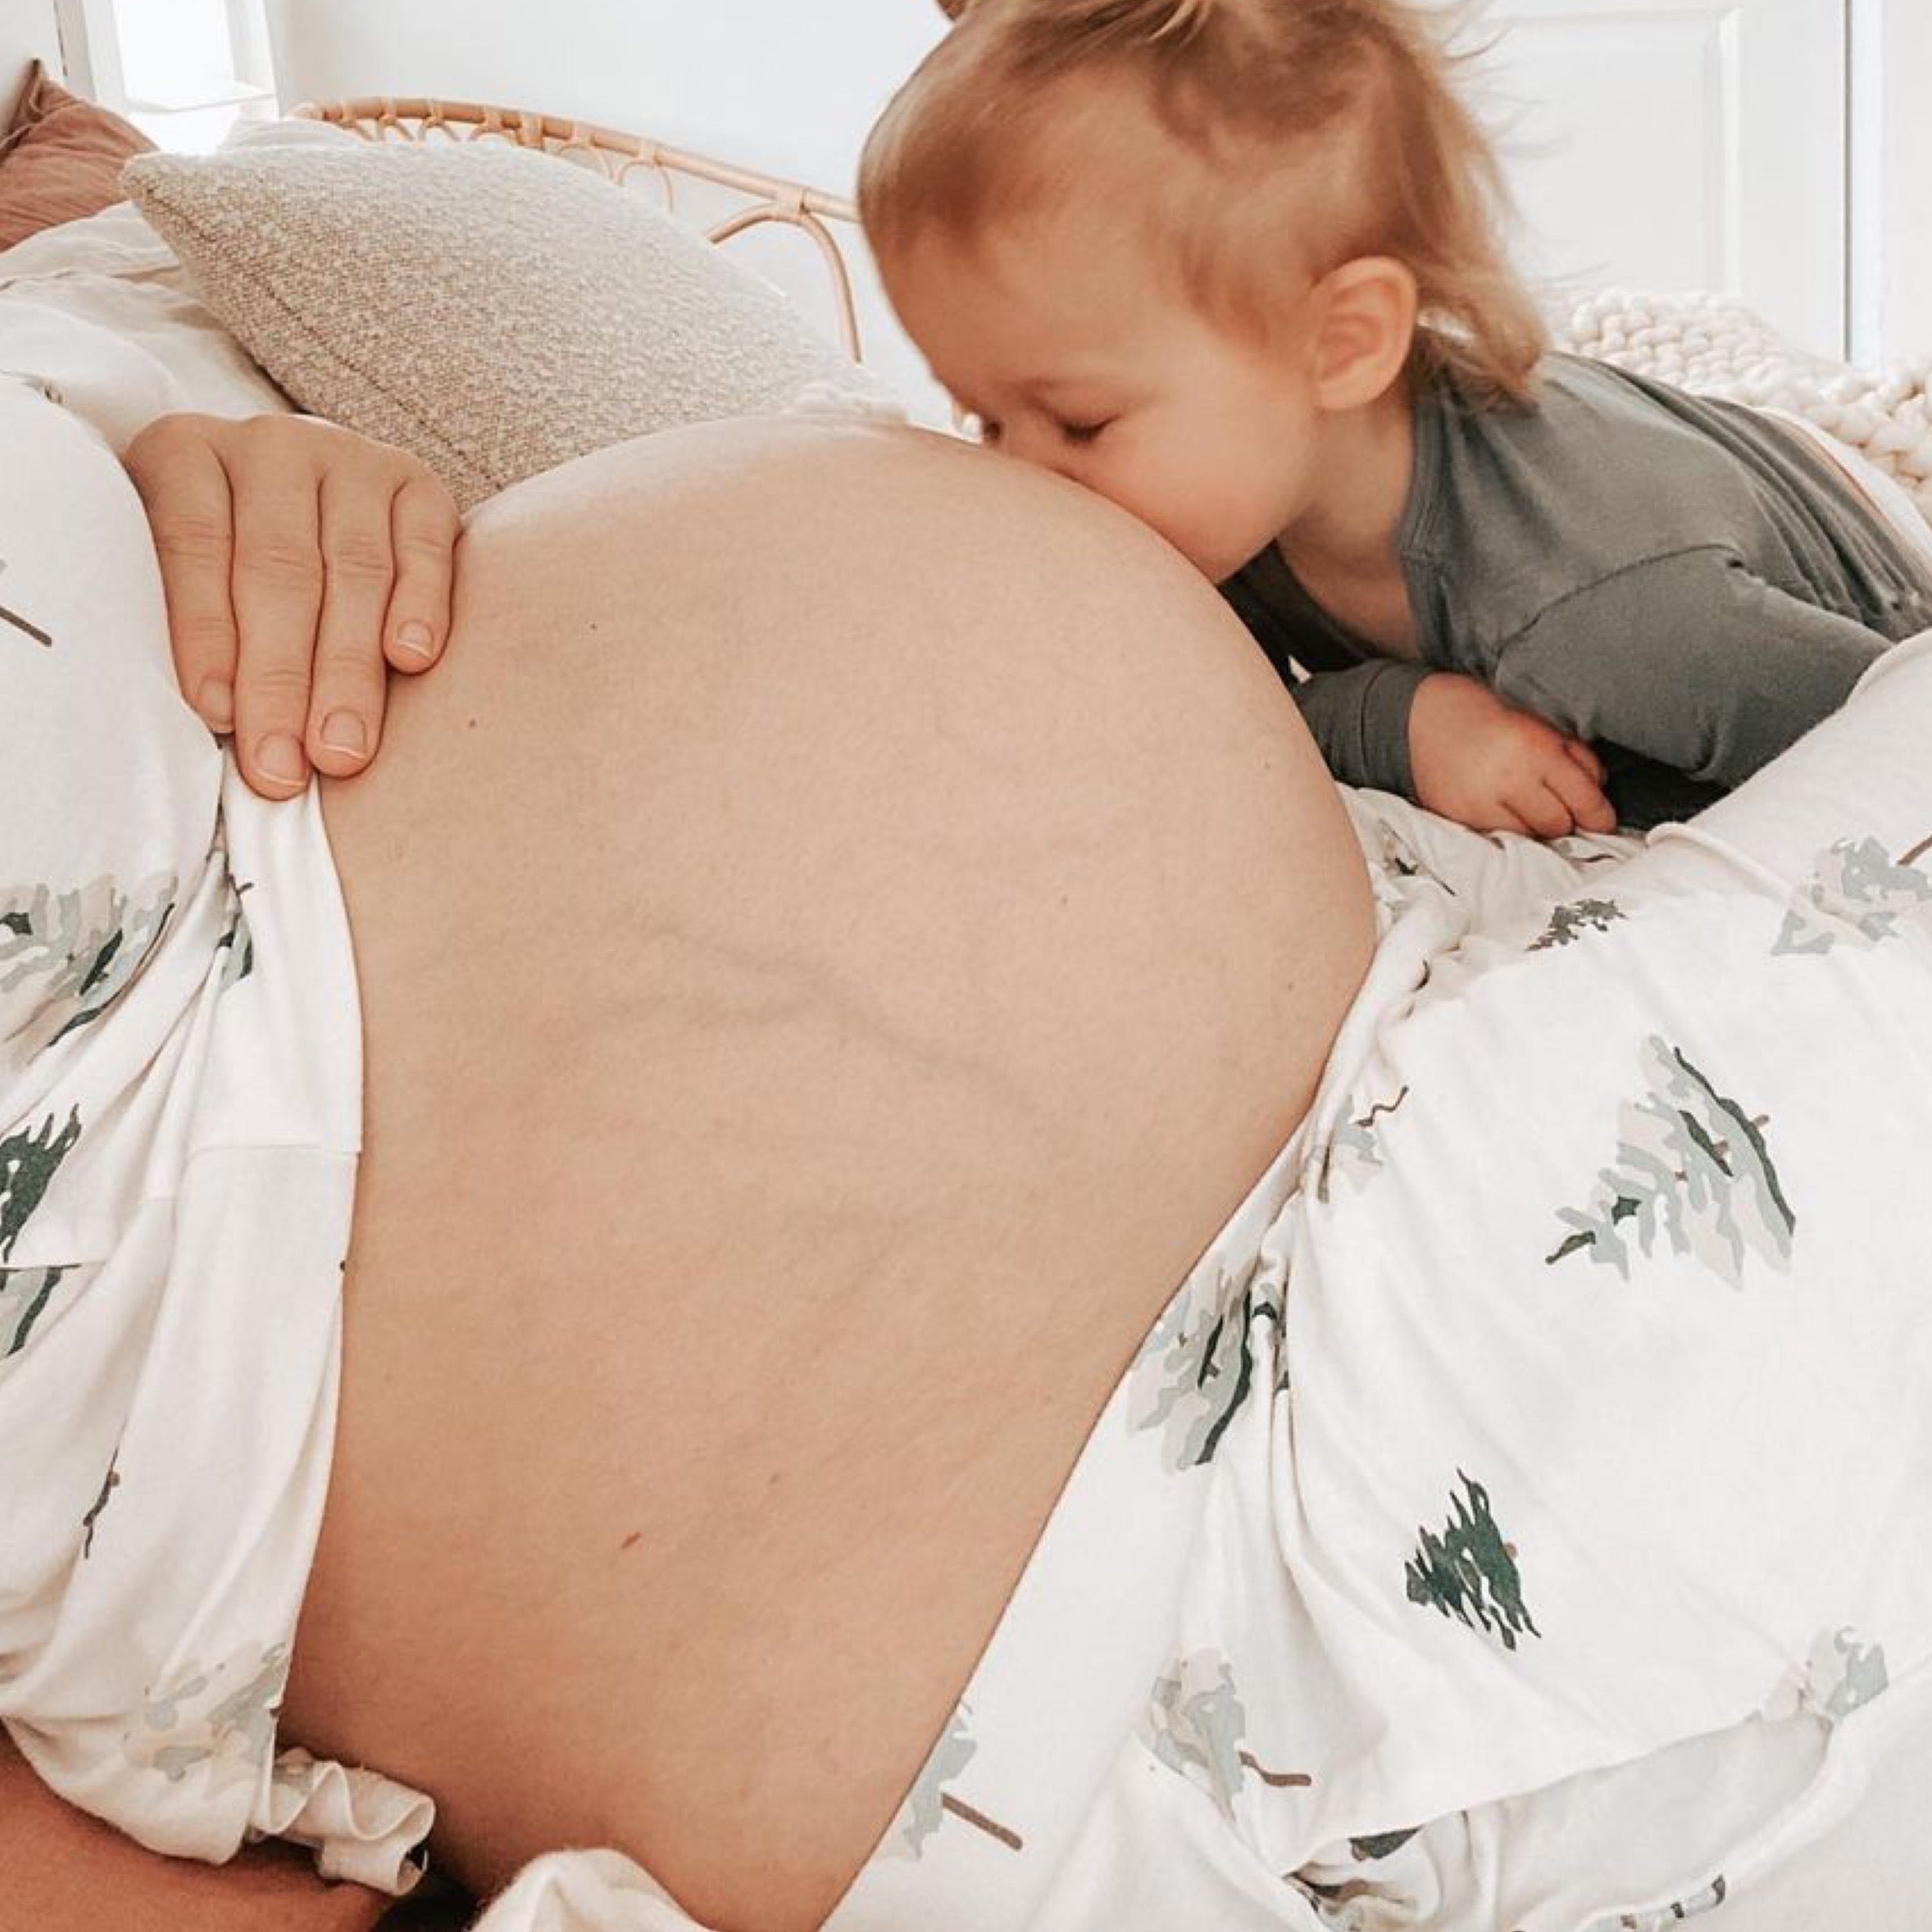 Sensitive Skin During Pregnancy